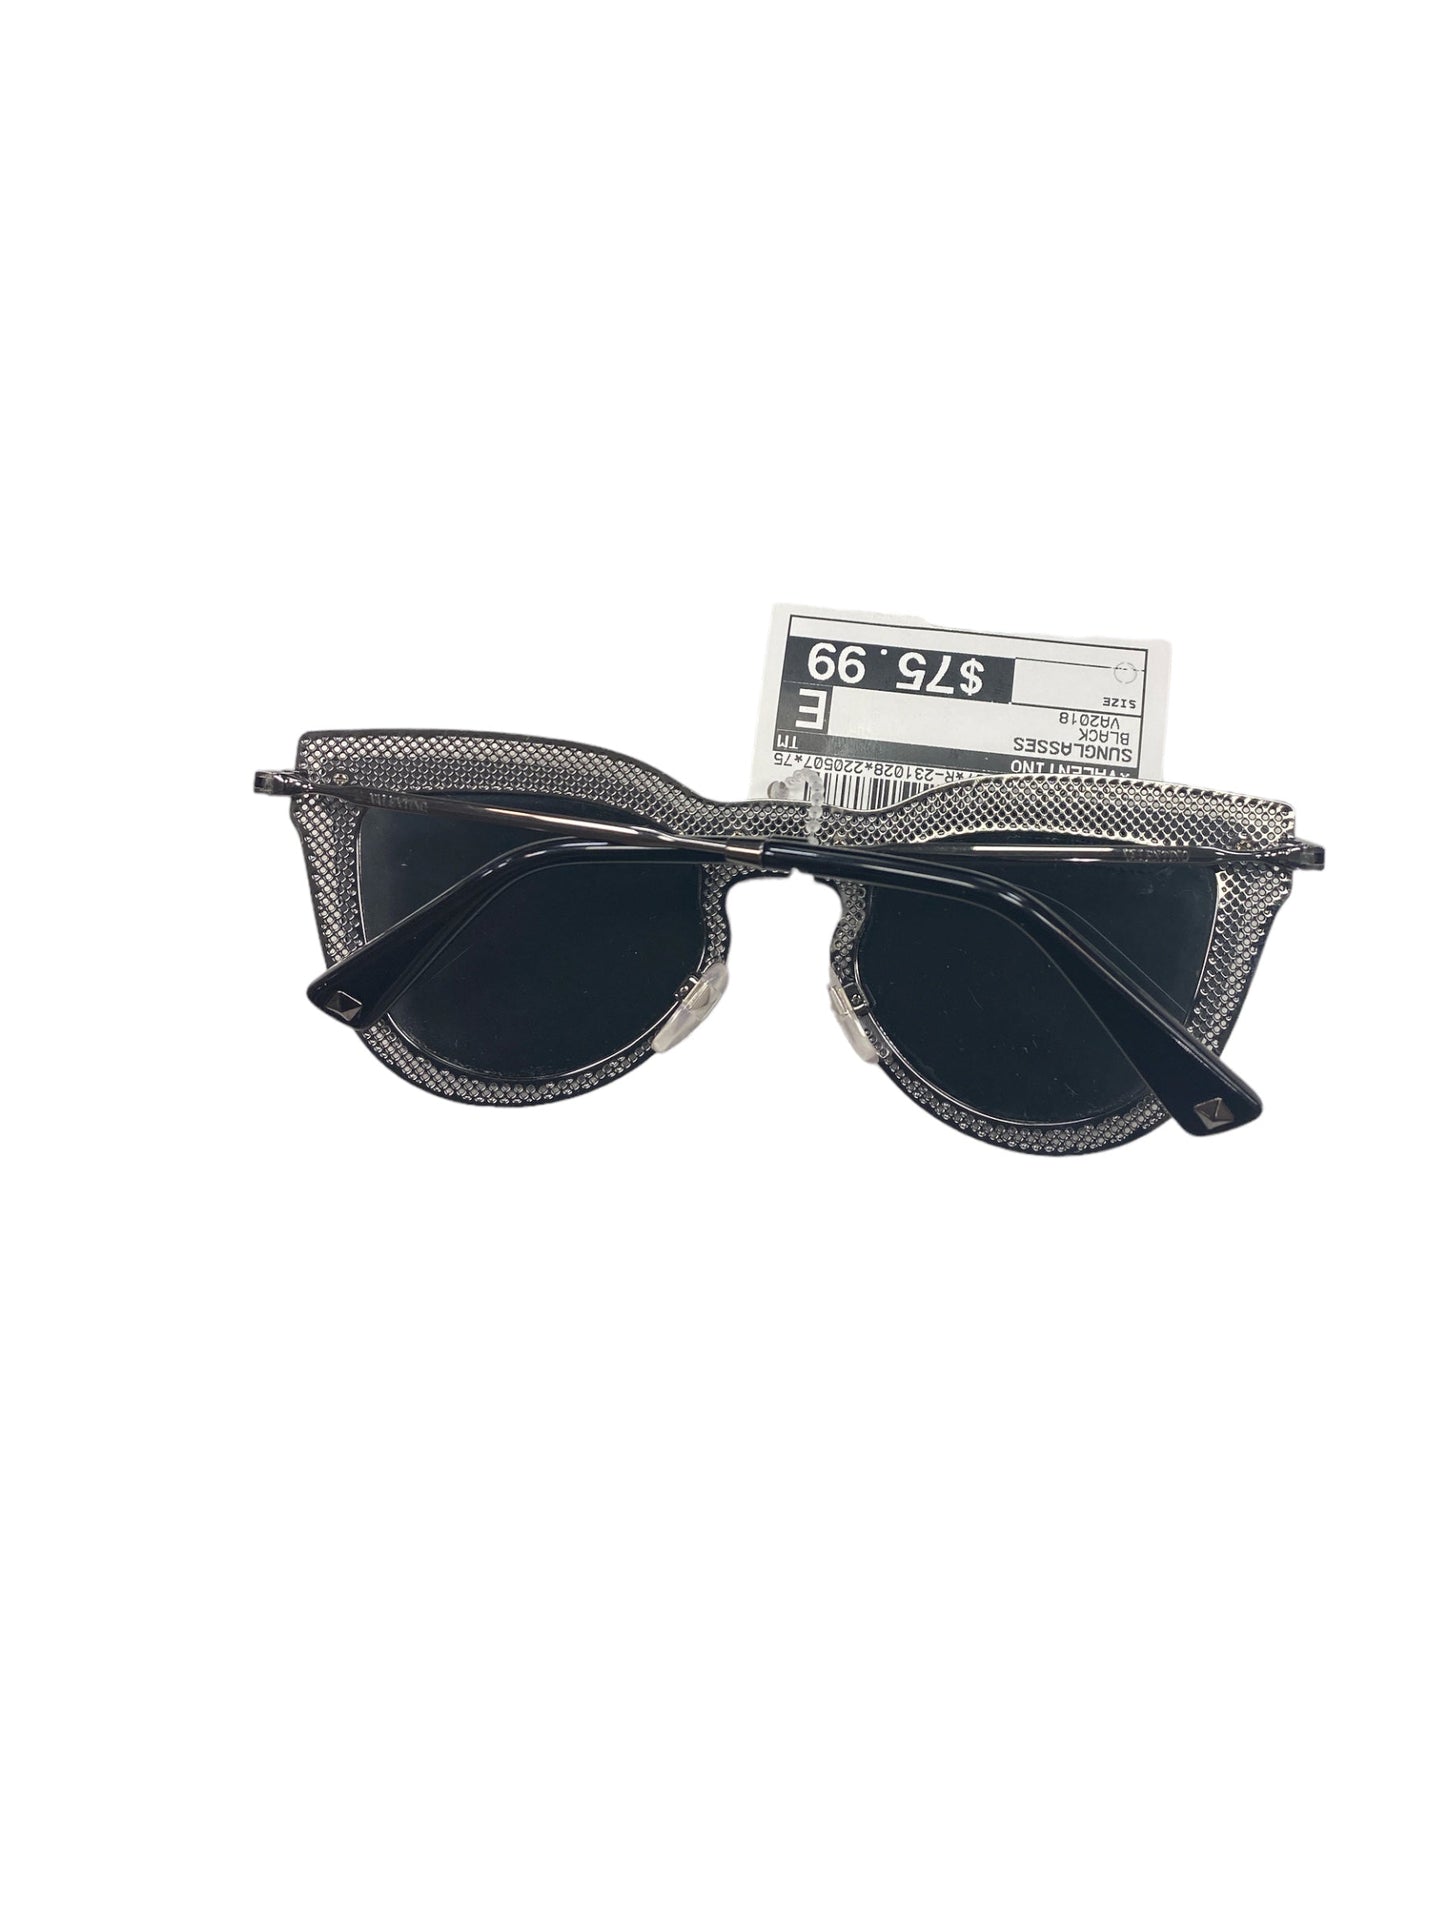 Sunglasses By Valentino